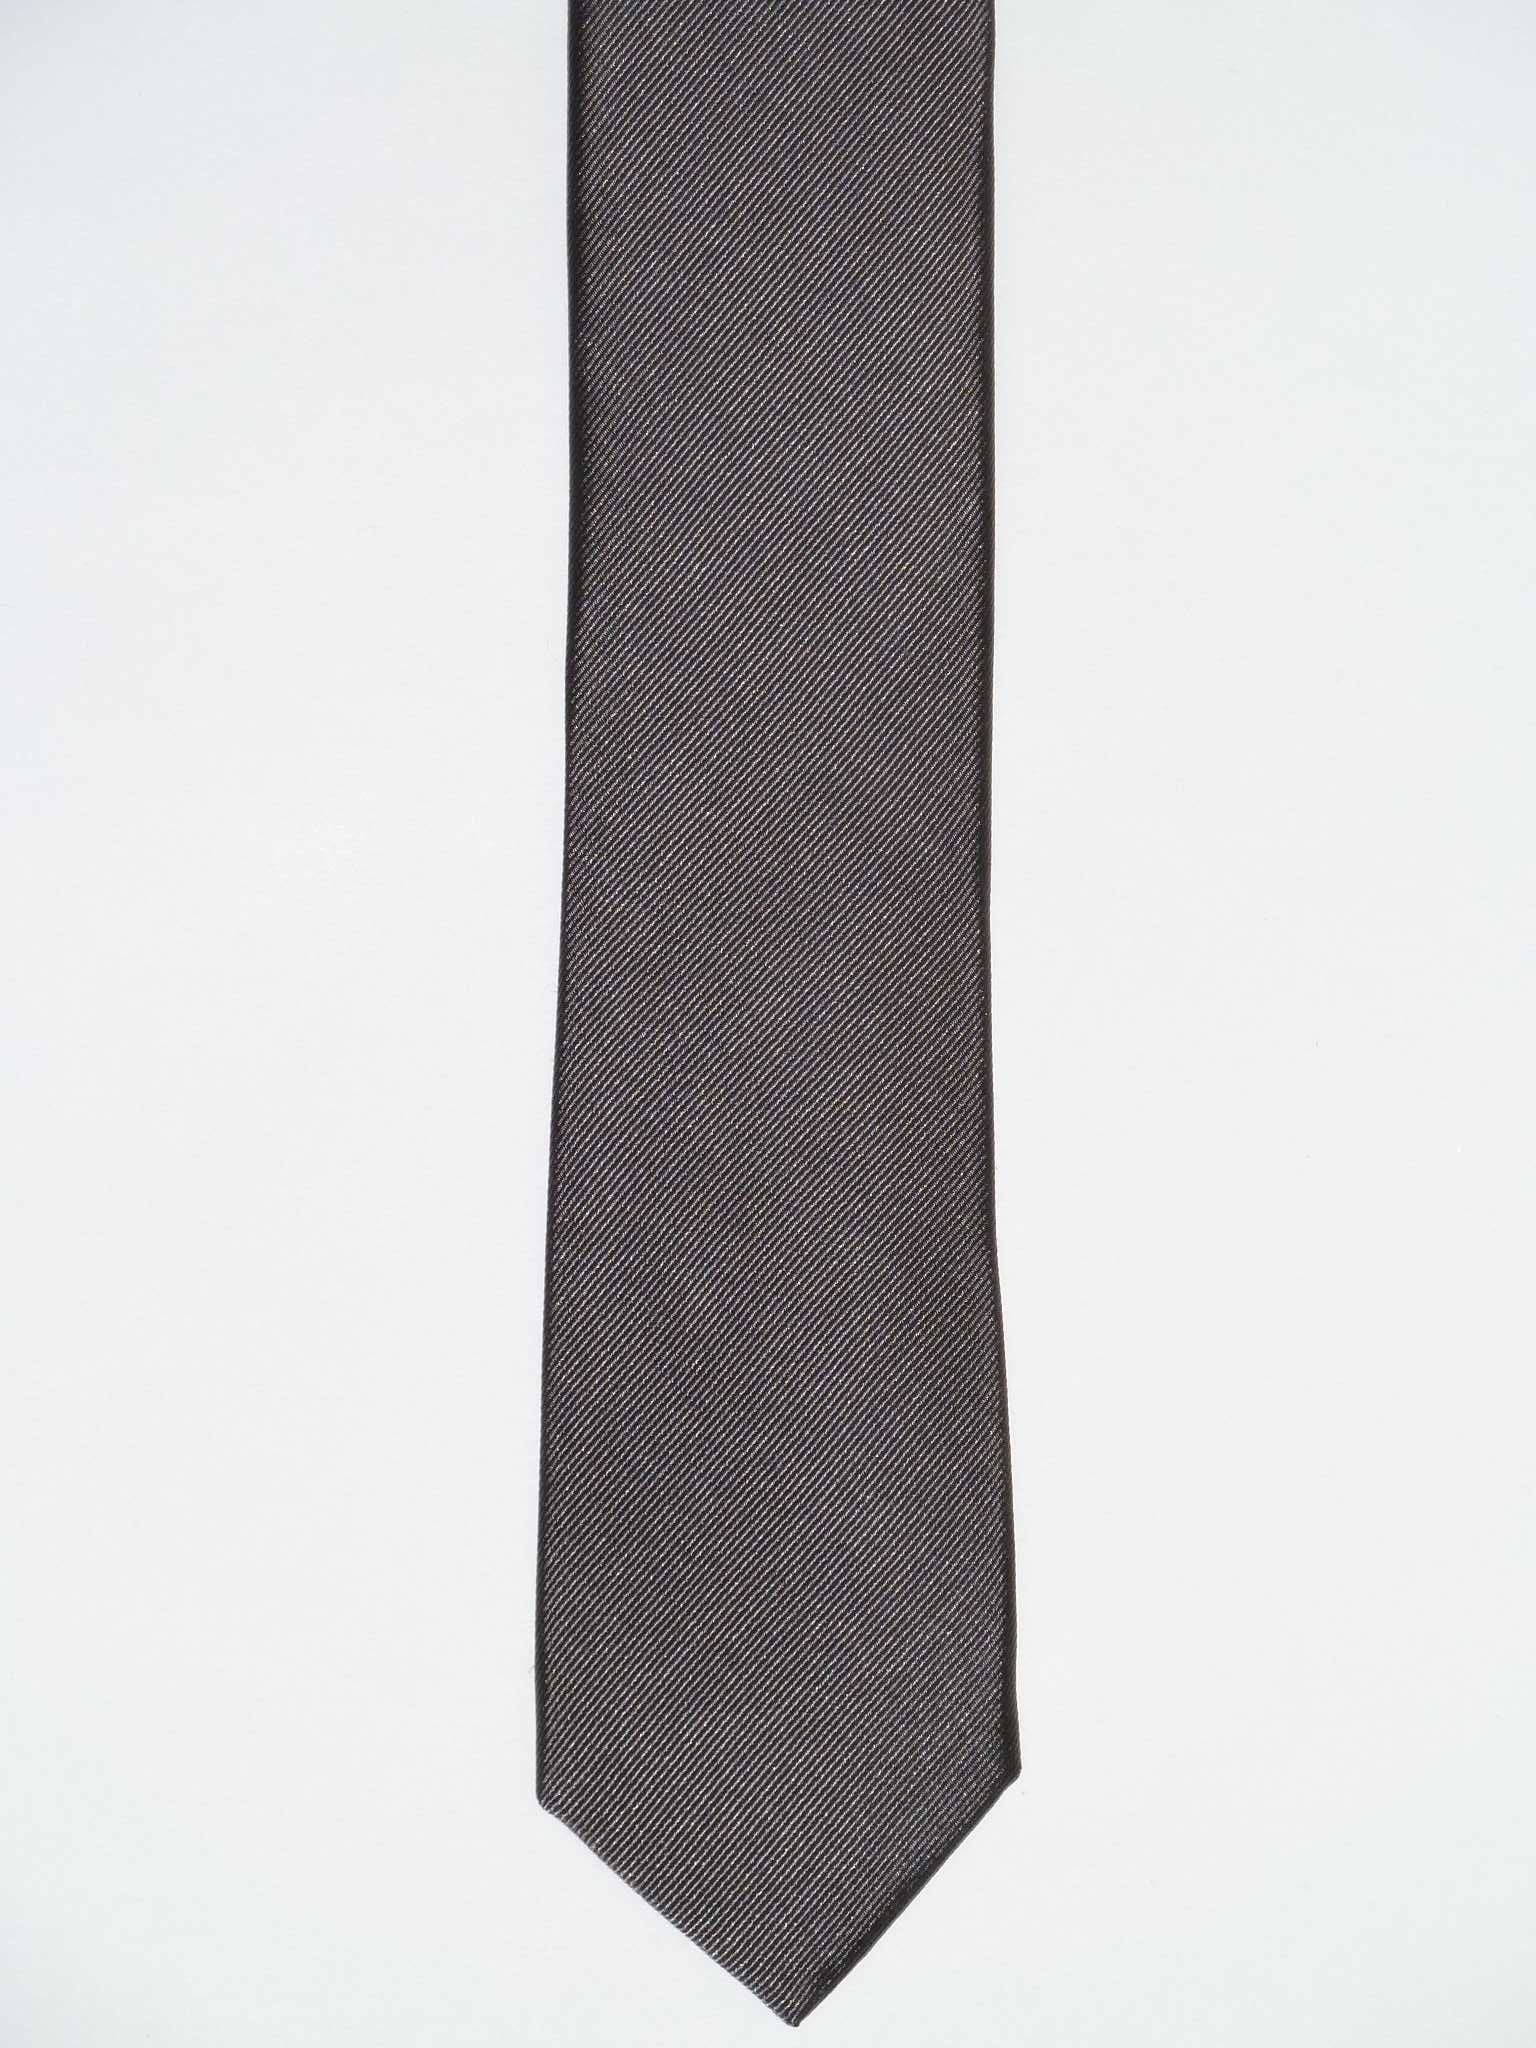 Krawatte, 100% Seide, Krawattenfabrik Ripps, 6cm – MAICA slim, Grau